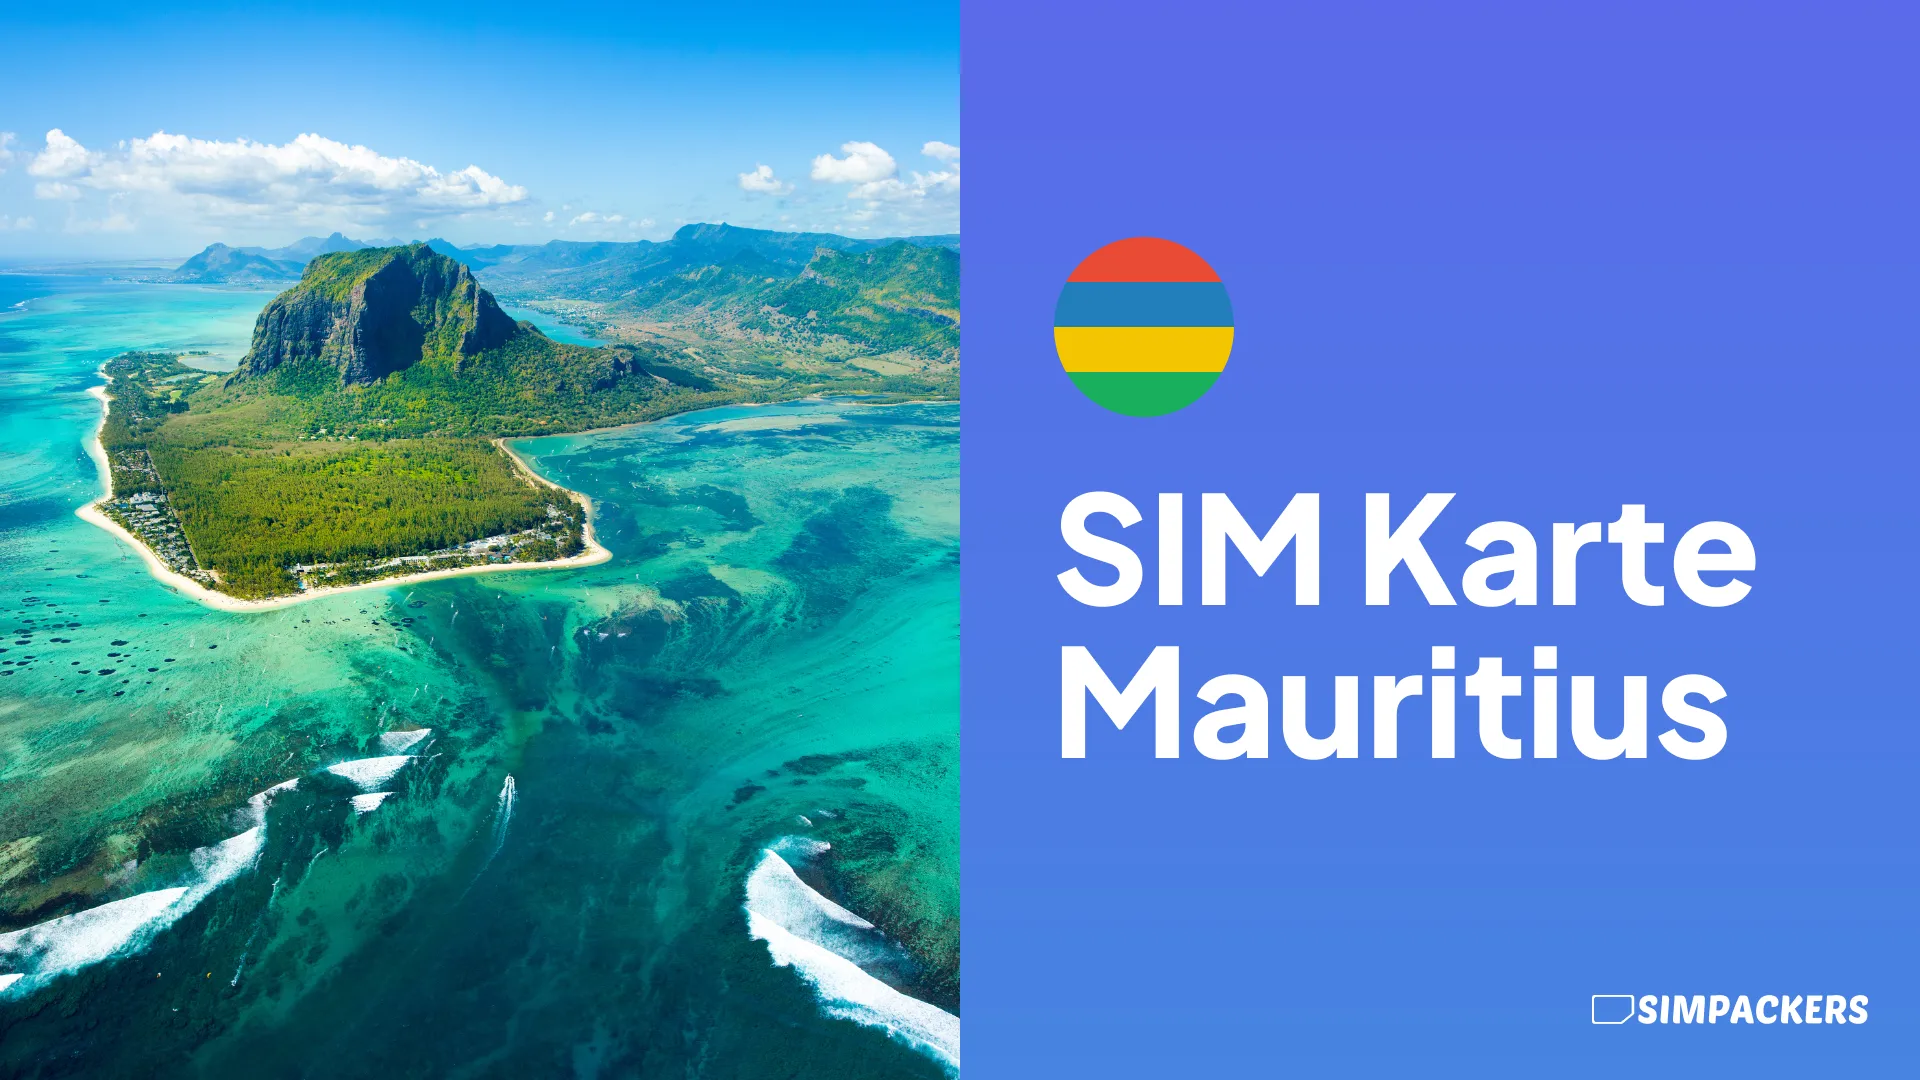 DE/FEATURED_IMAGES/sim-karte-mauritius.webp